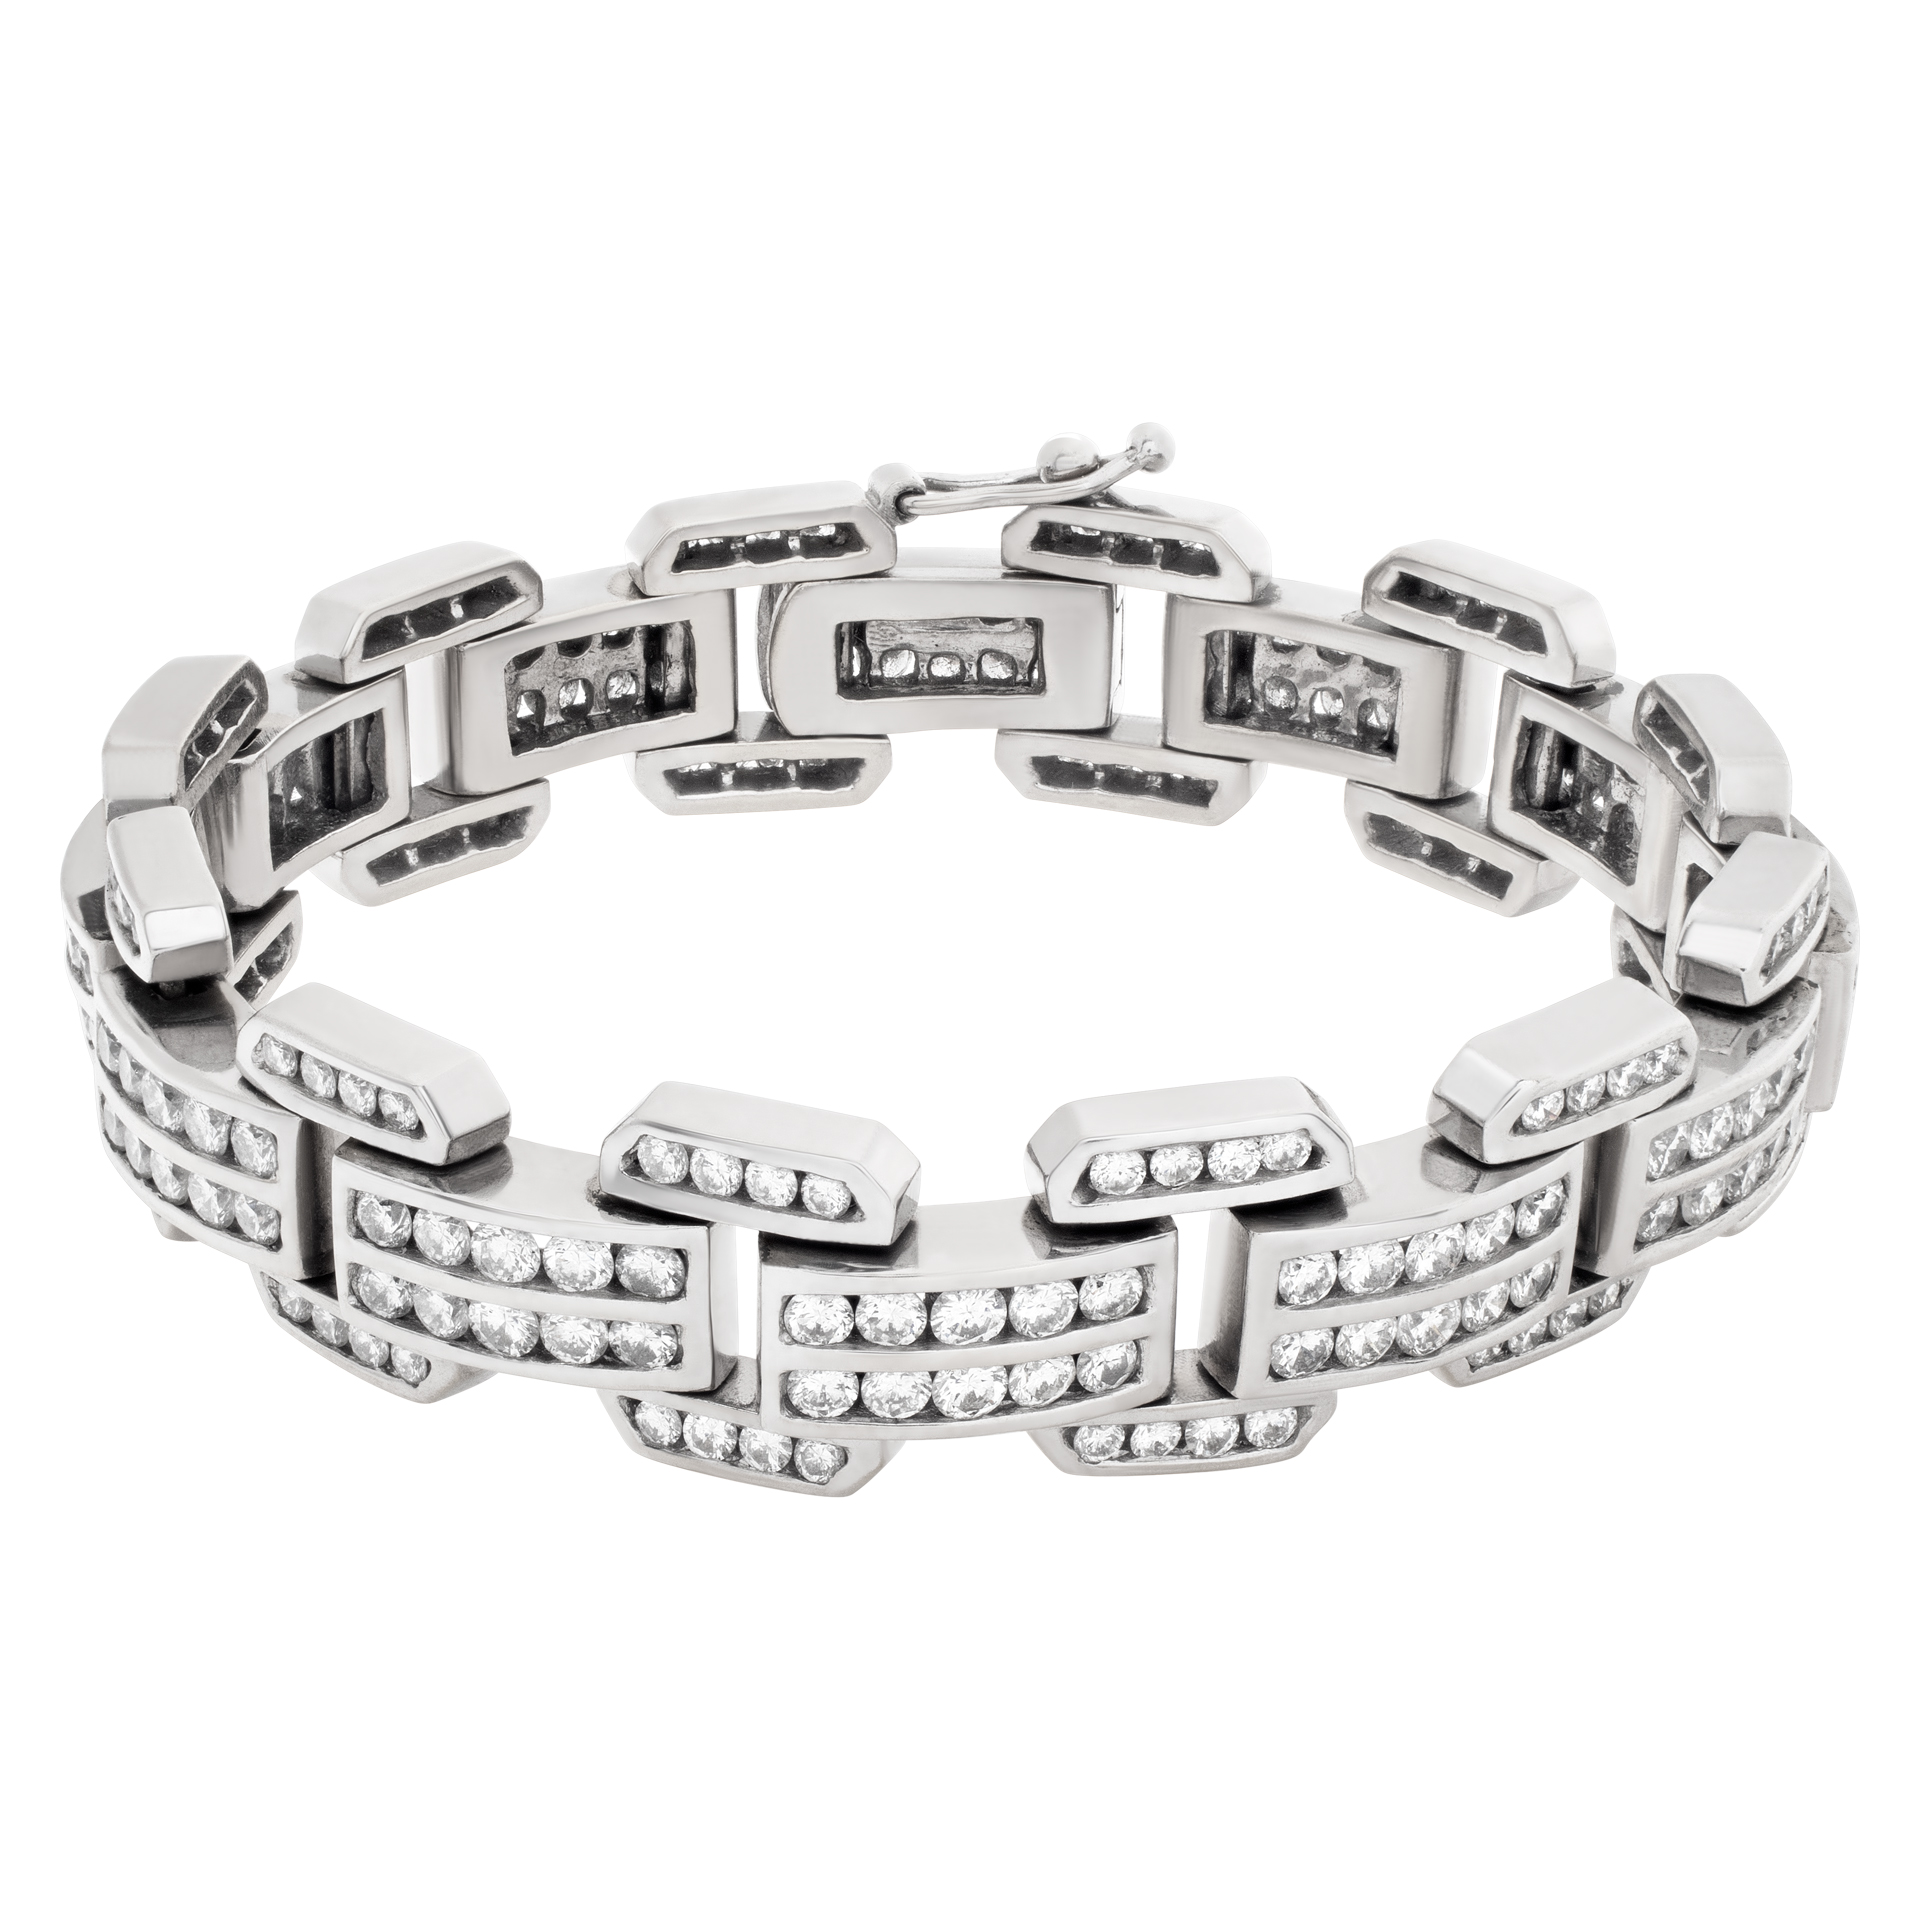 Elegant Art Deco style diamond bracelet set in 14k white gold. Approximately 8 carats channel set full cut round brilliant diamonds, estimate: G/H color- VS clarity